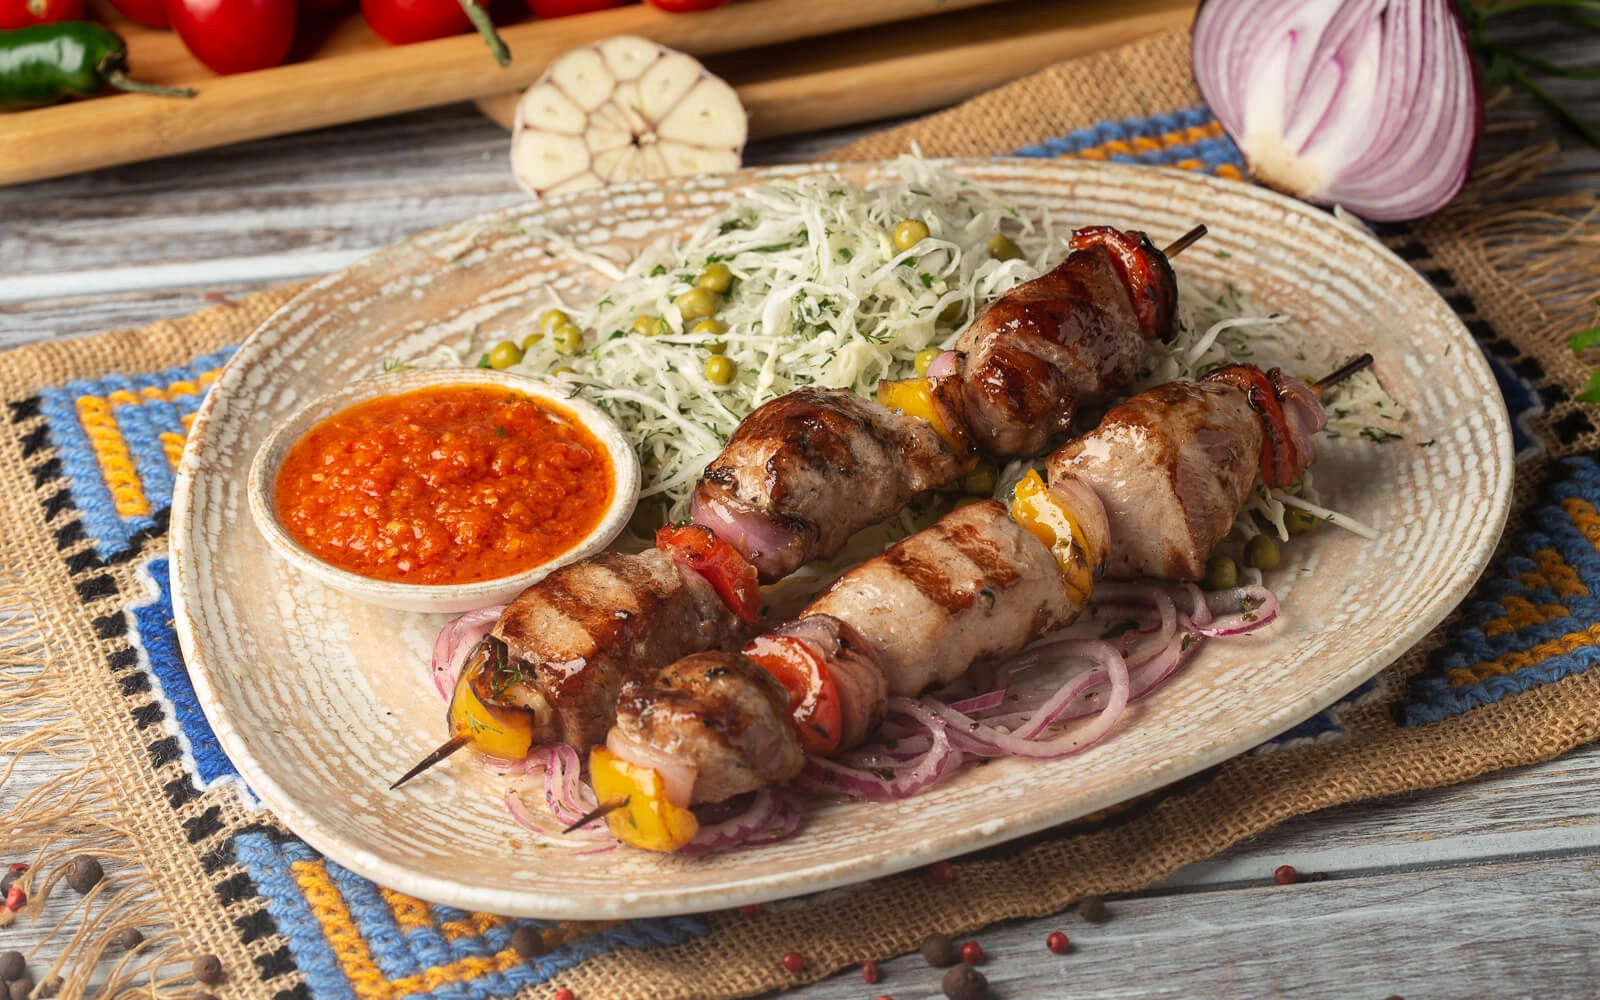 Pork kebab with salad and adjika